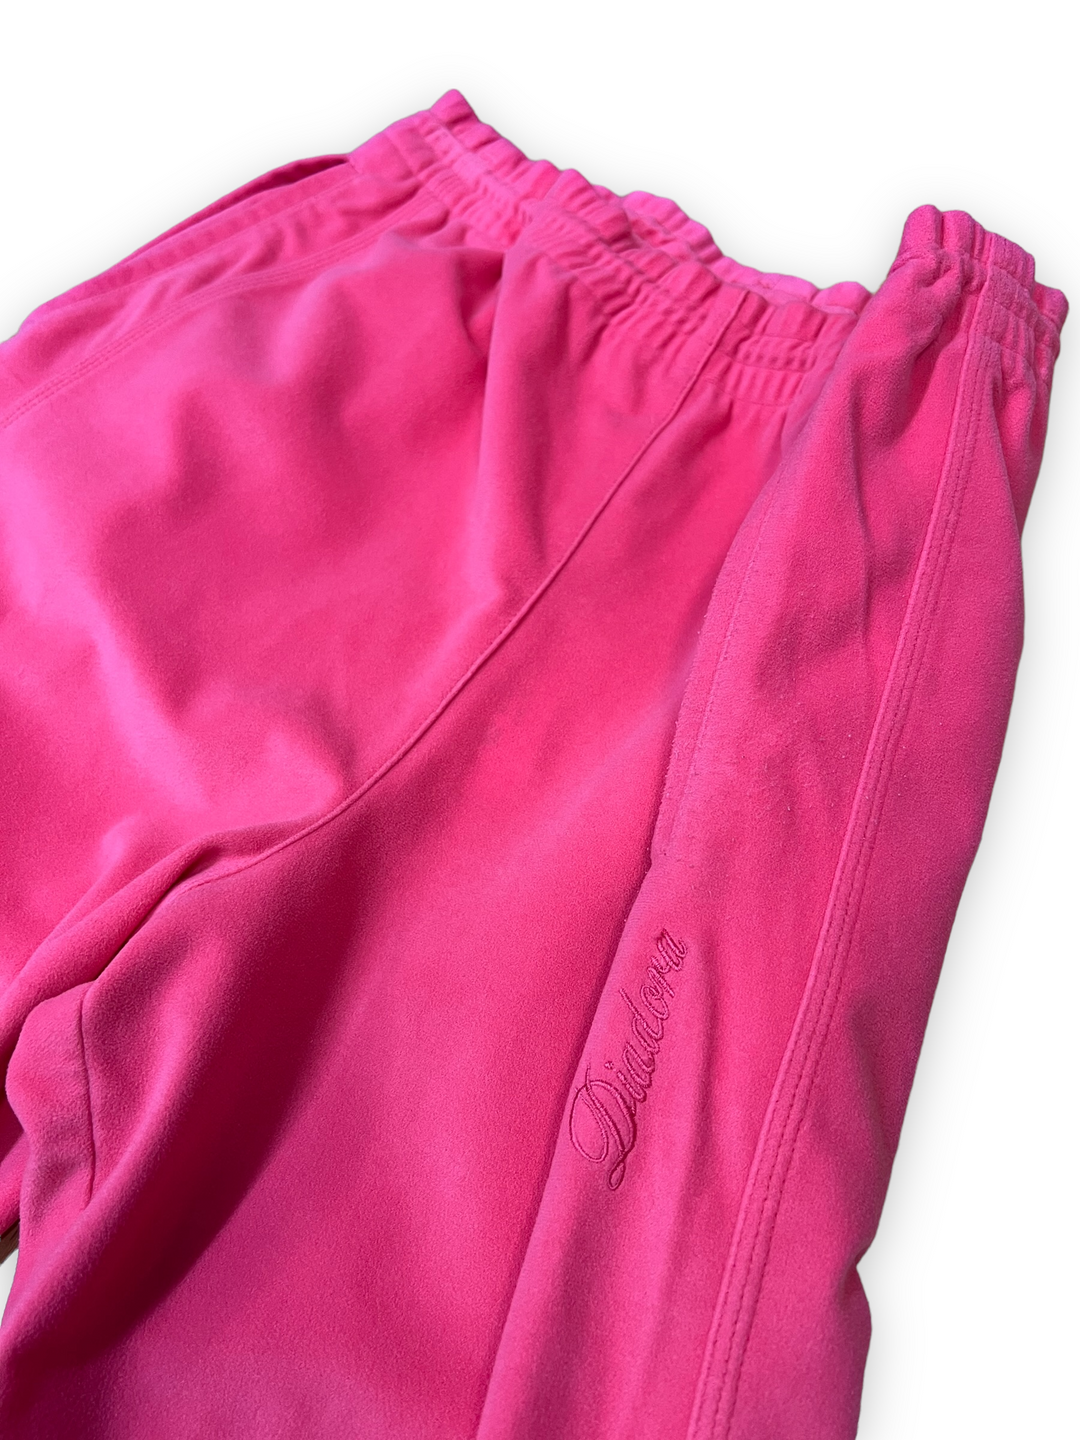 Diadora Velvet Sweatpants Women's Large